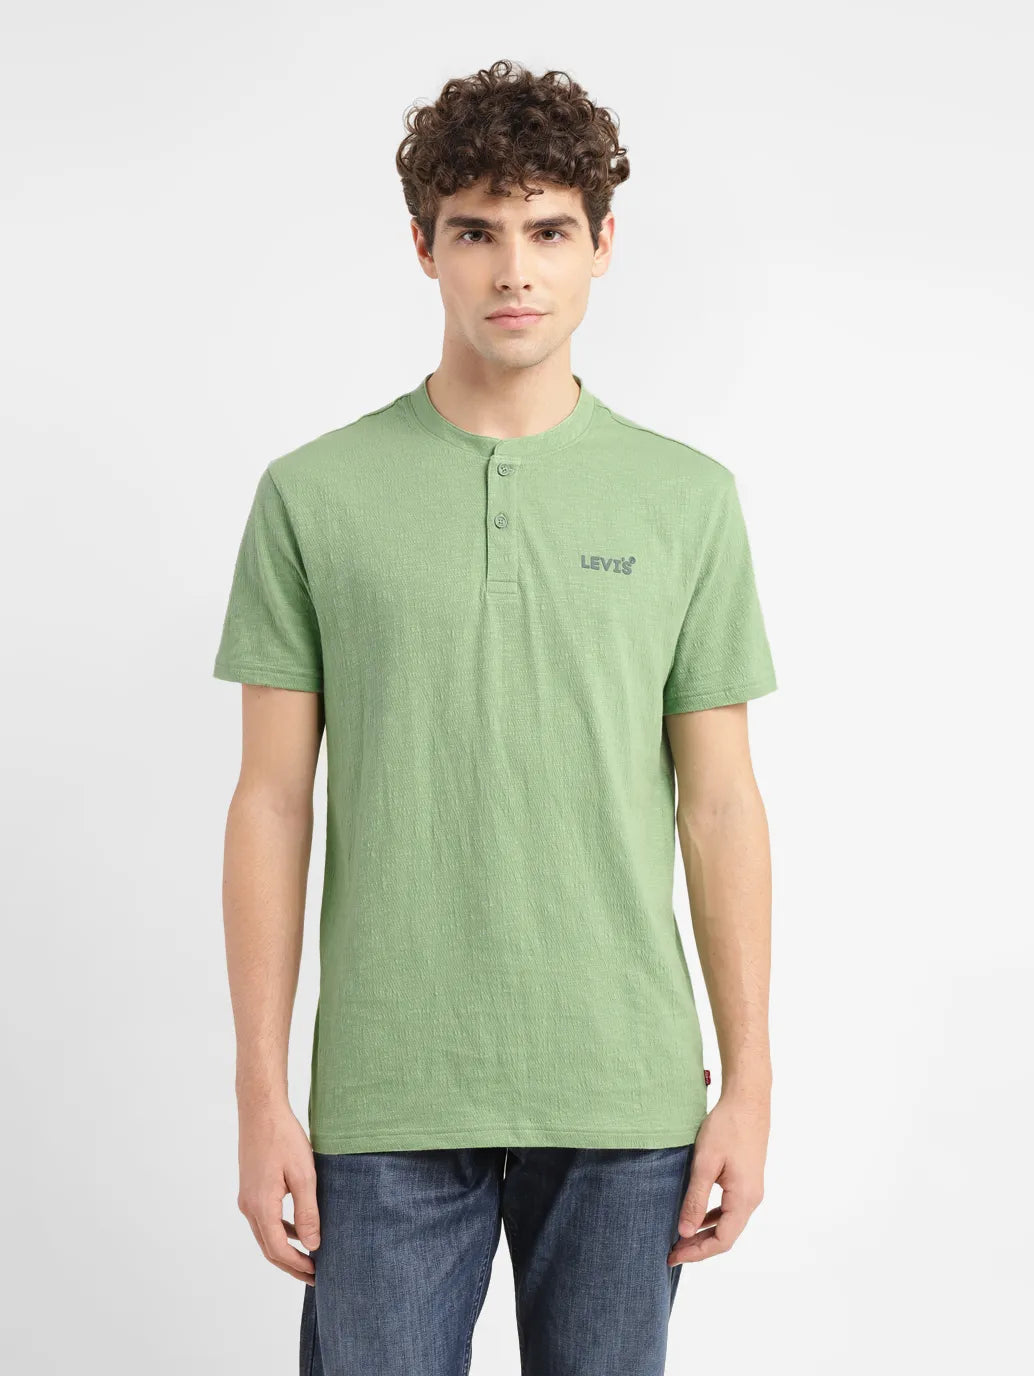 Men's Textured Slim Fit T-shirt